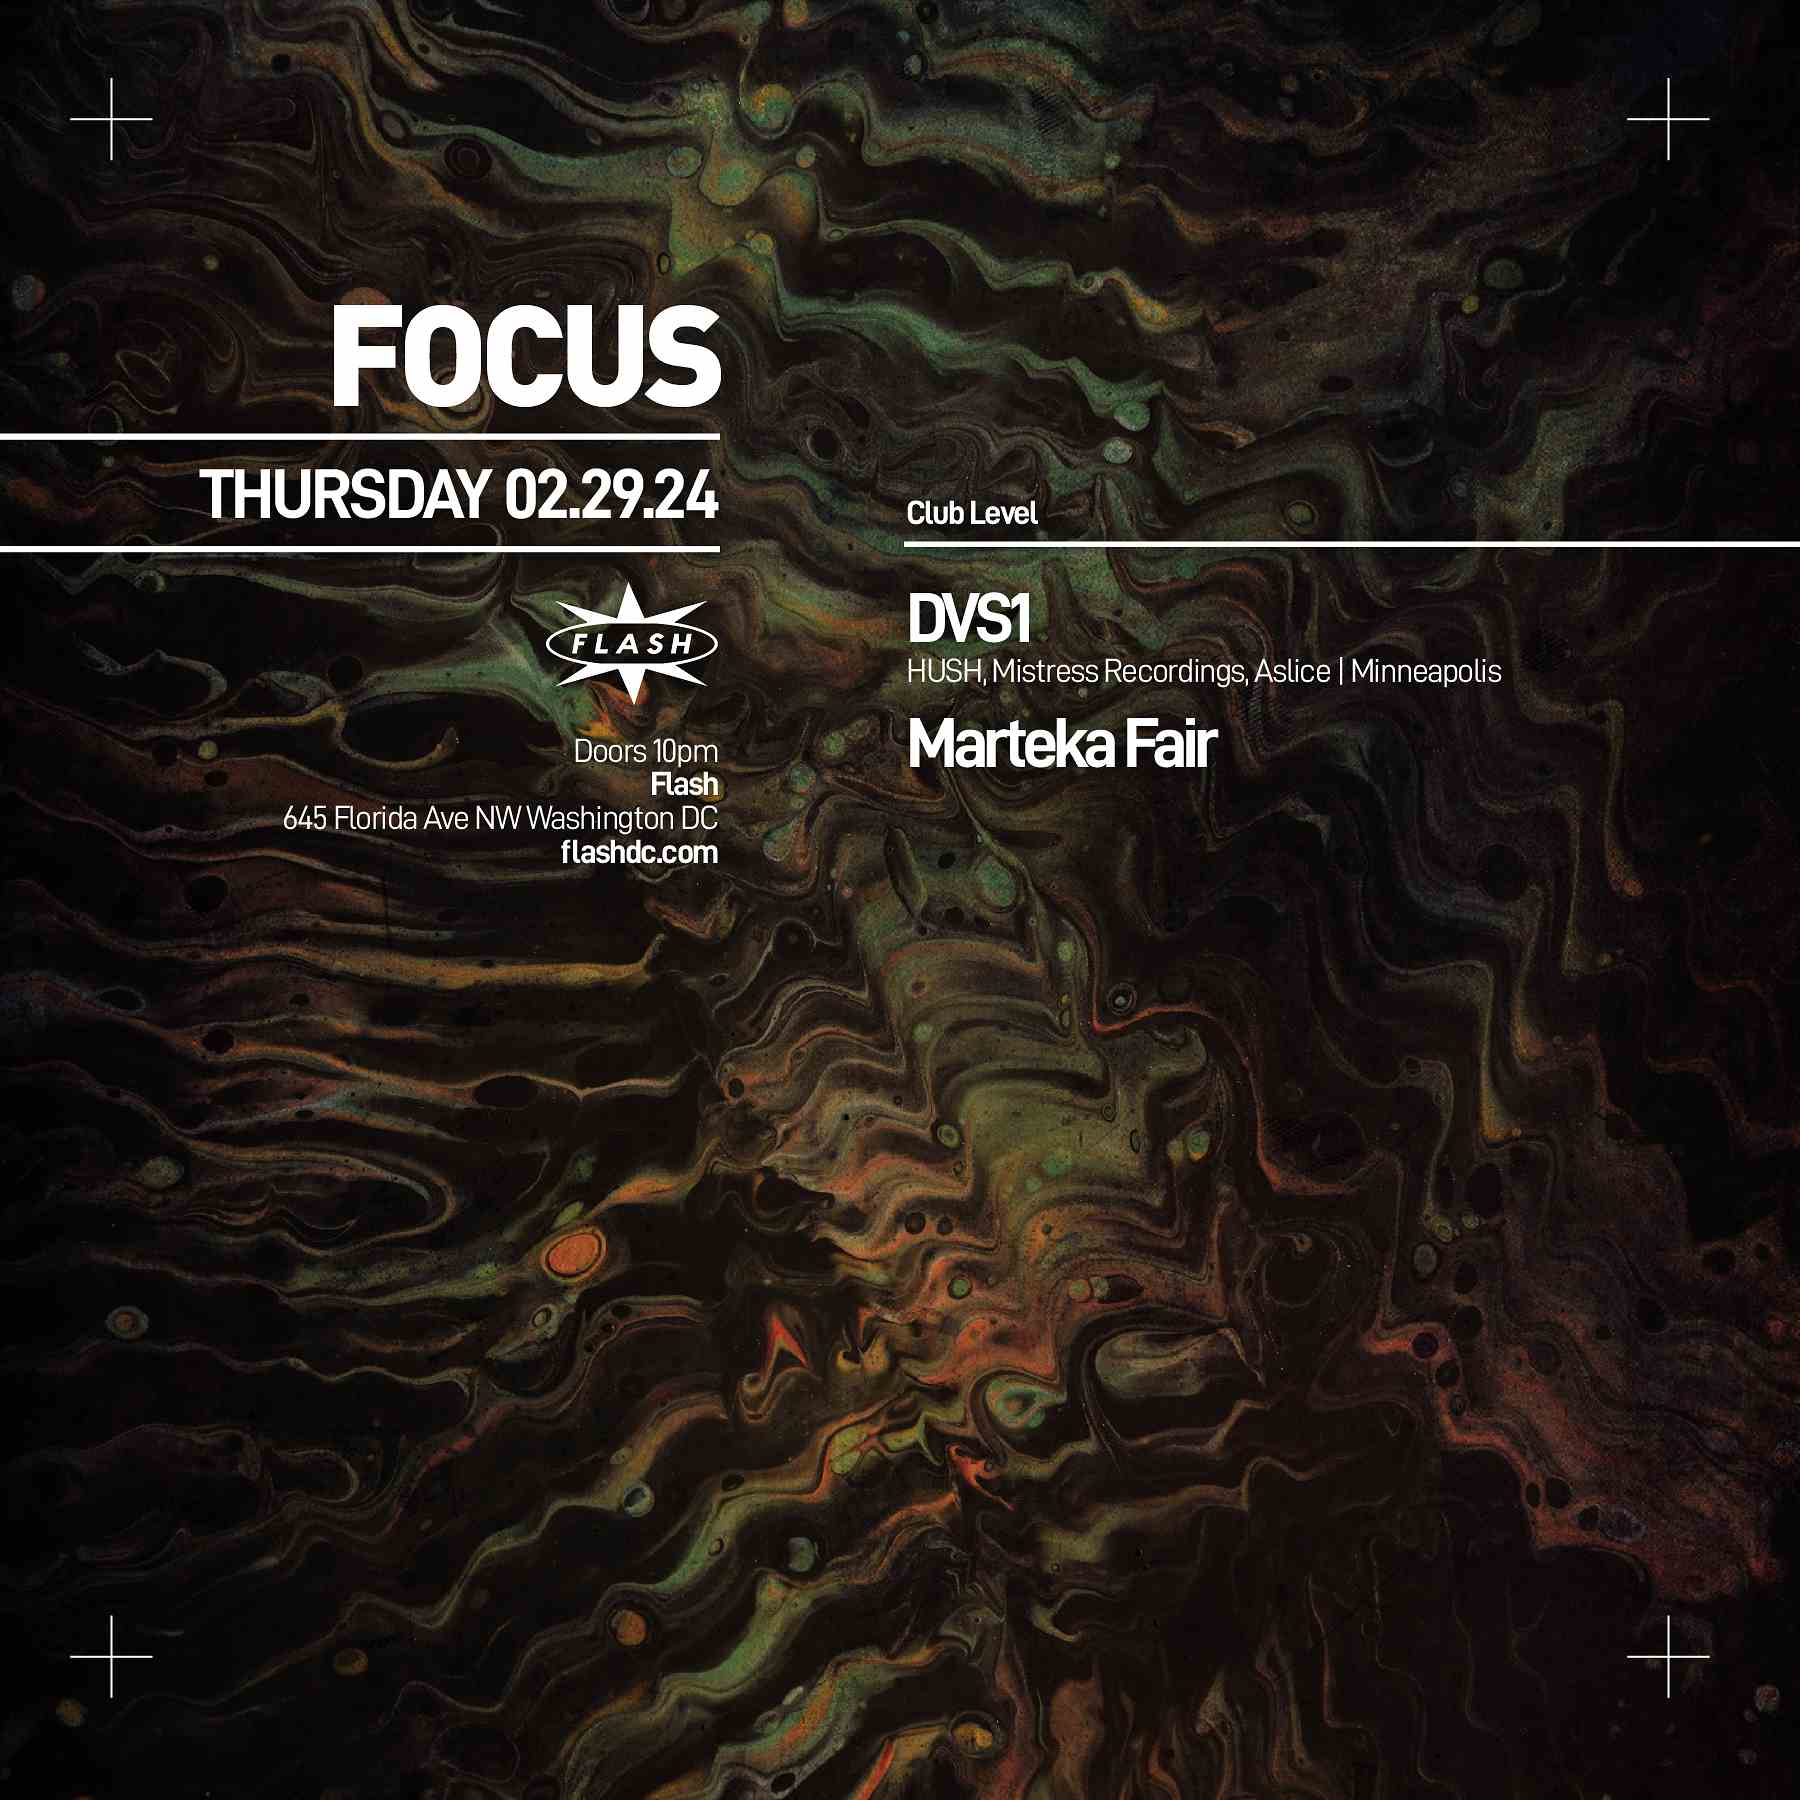 FOCUS: DVS1 event flyer